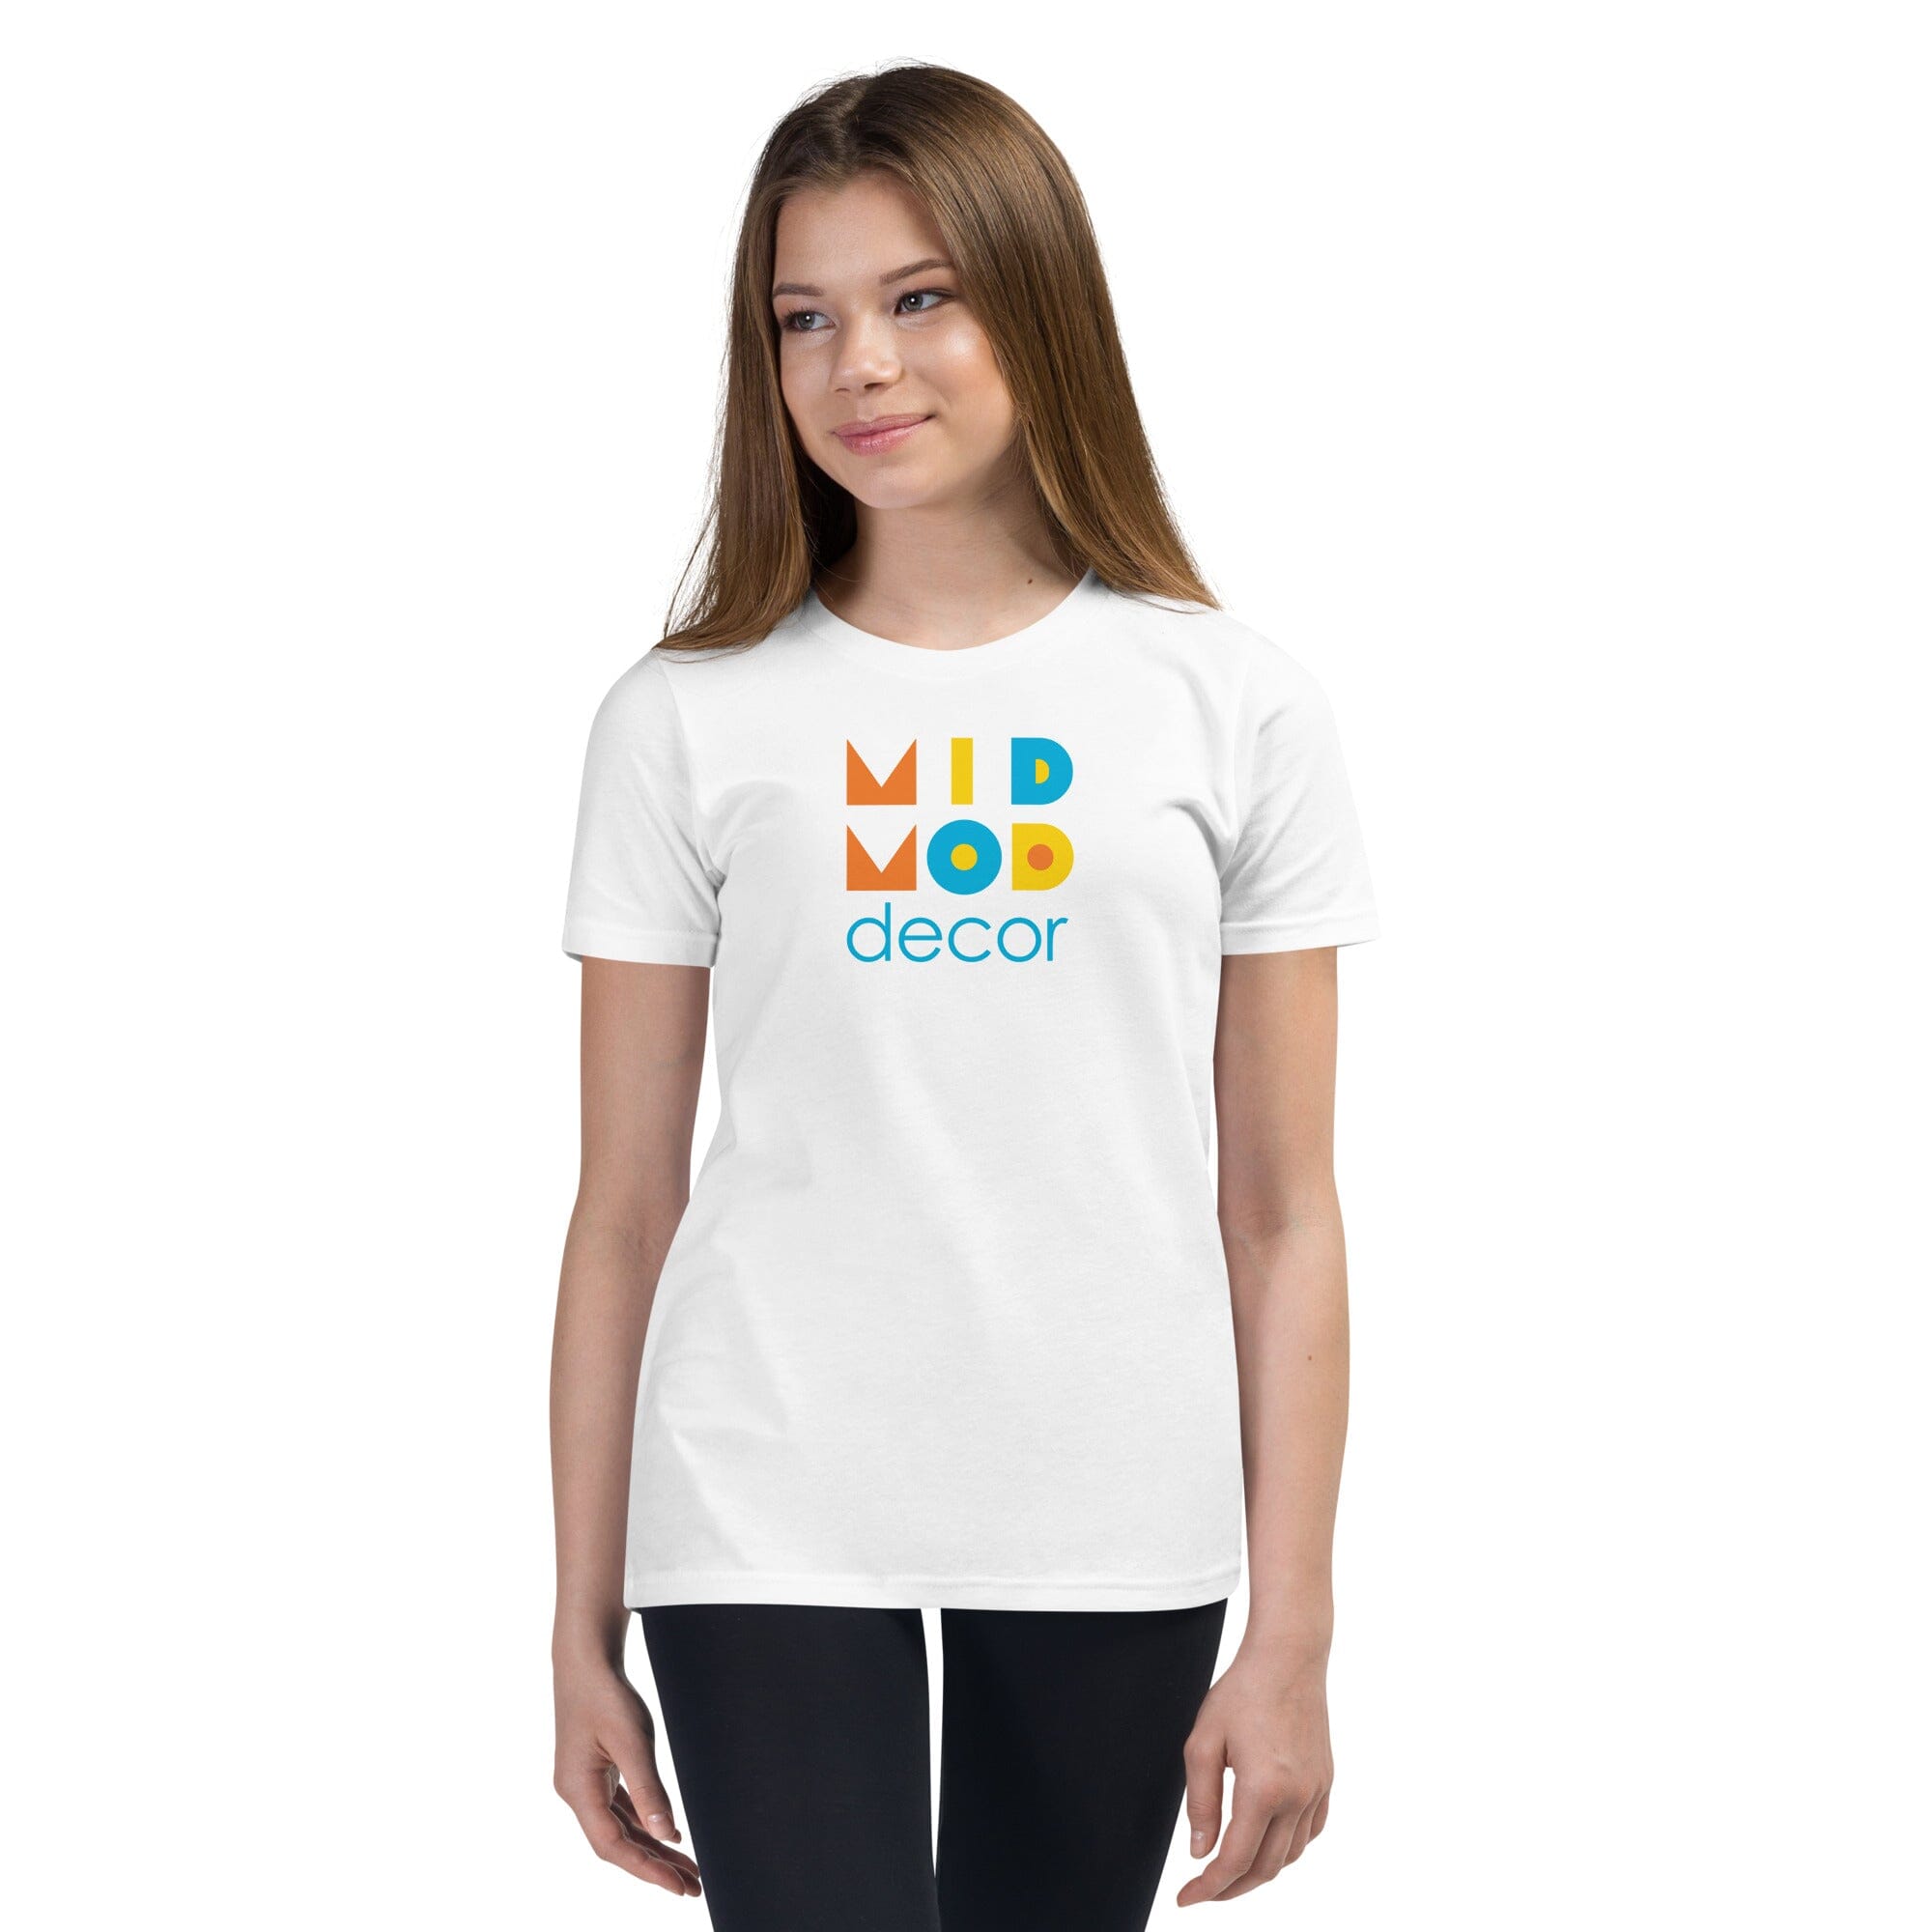 MidMod Decor - Youth Short Sleeve T-Shirt MidMod Decor White S 